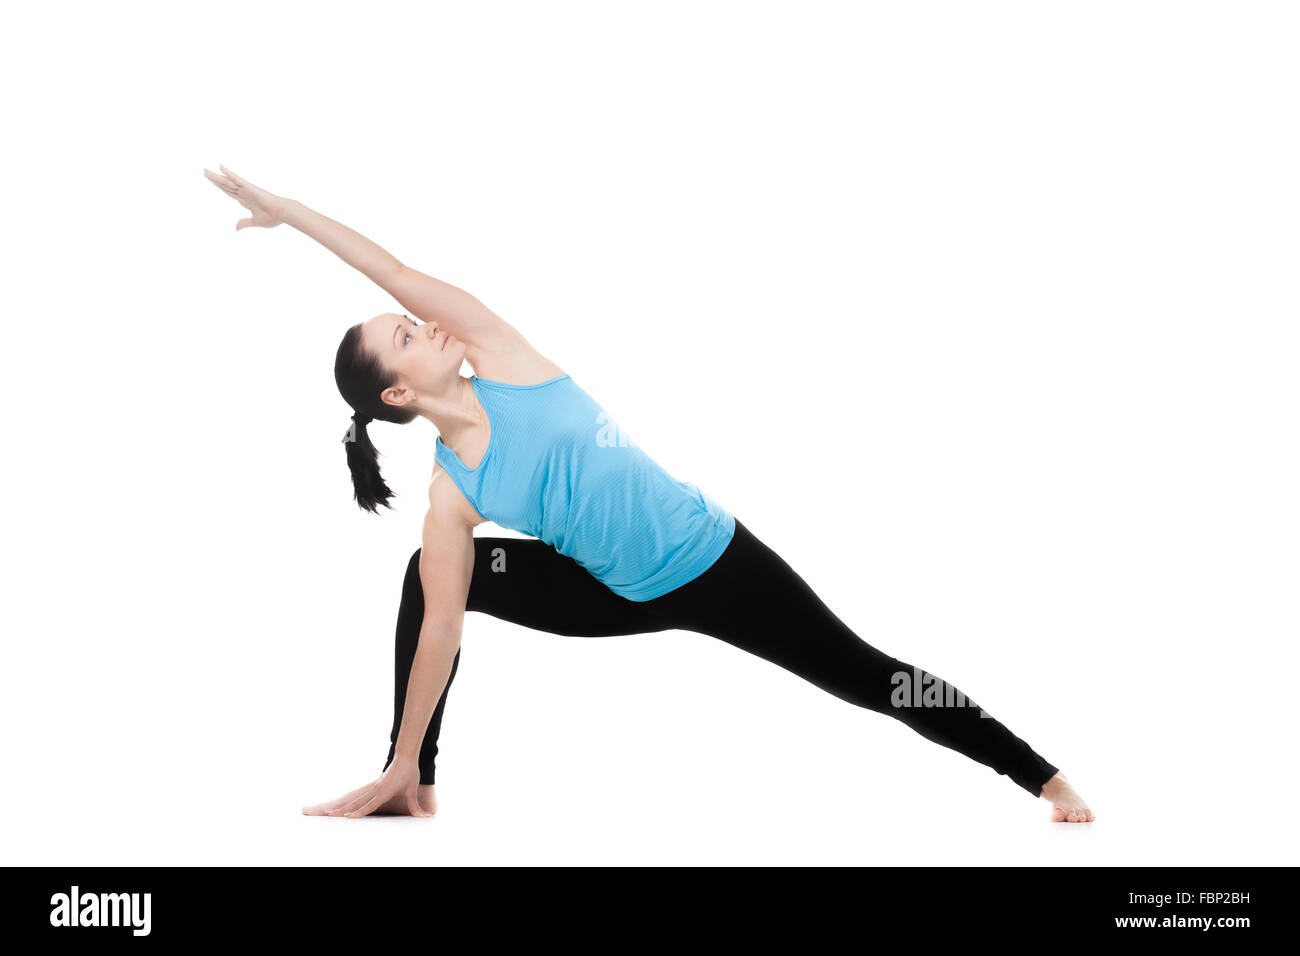 Yoga girl on white background exercises in yoga posture Utthita Parsva Konasana (Extended Side Angle Pose) Stock Photo